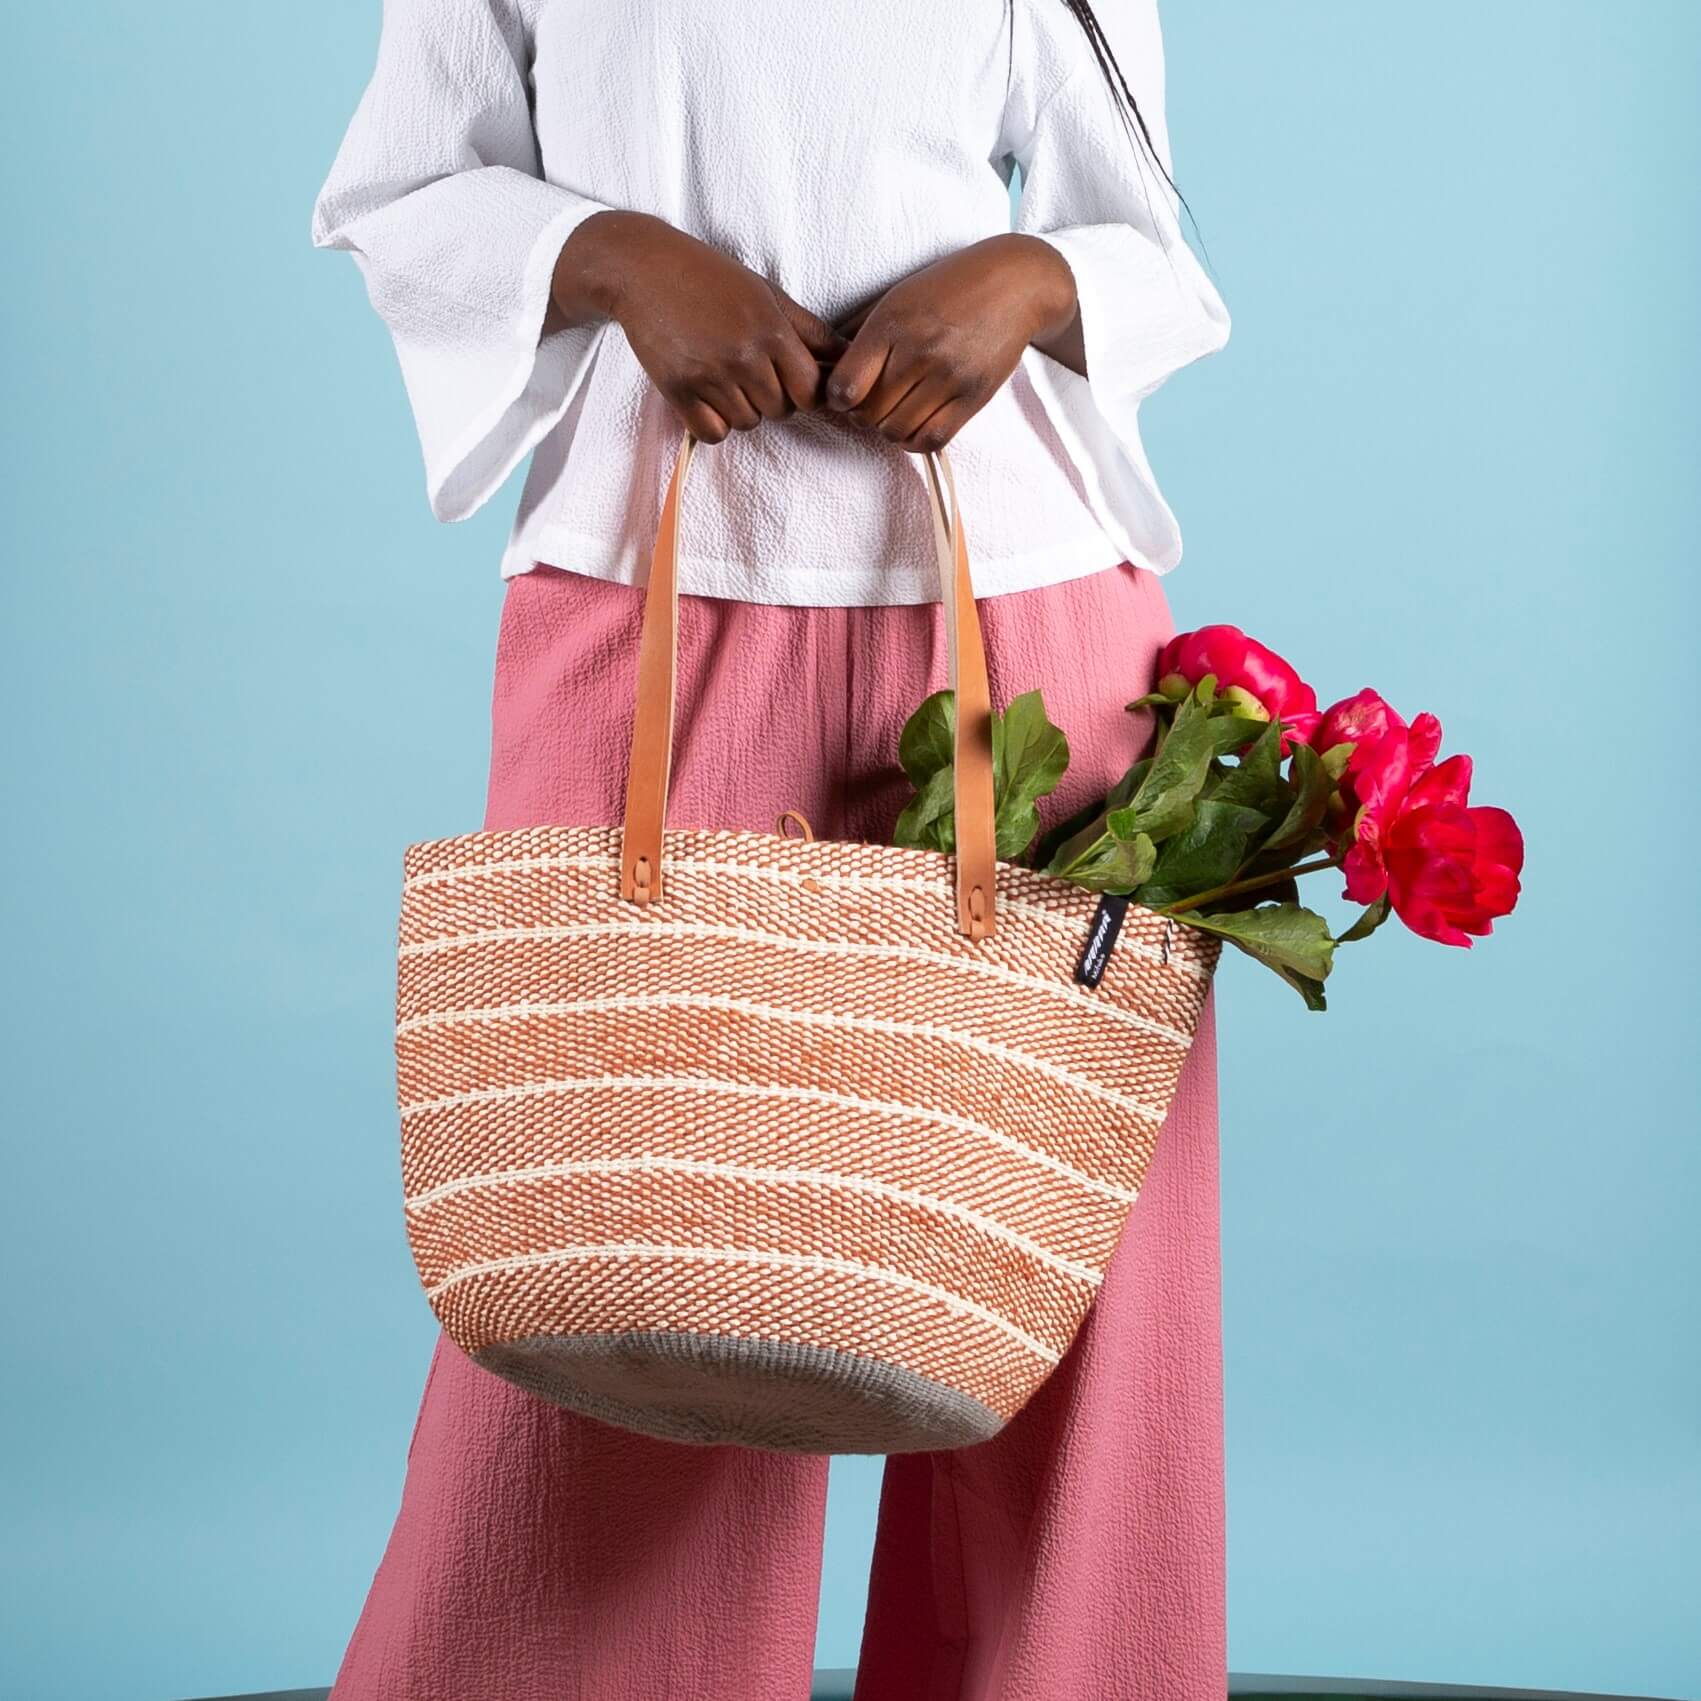 Mifuko Wool and paper Shopper basket Pamba shopper basket | Terracotta twill weave M